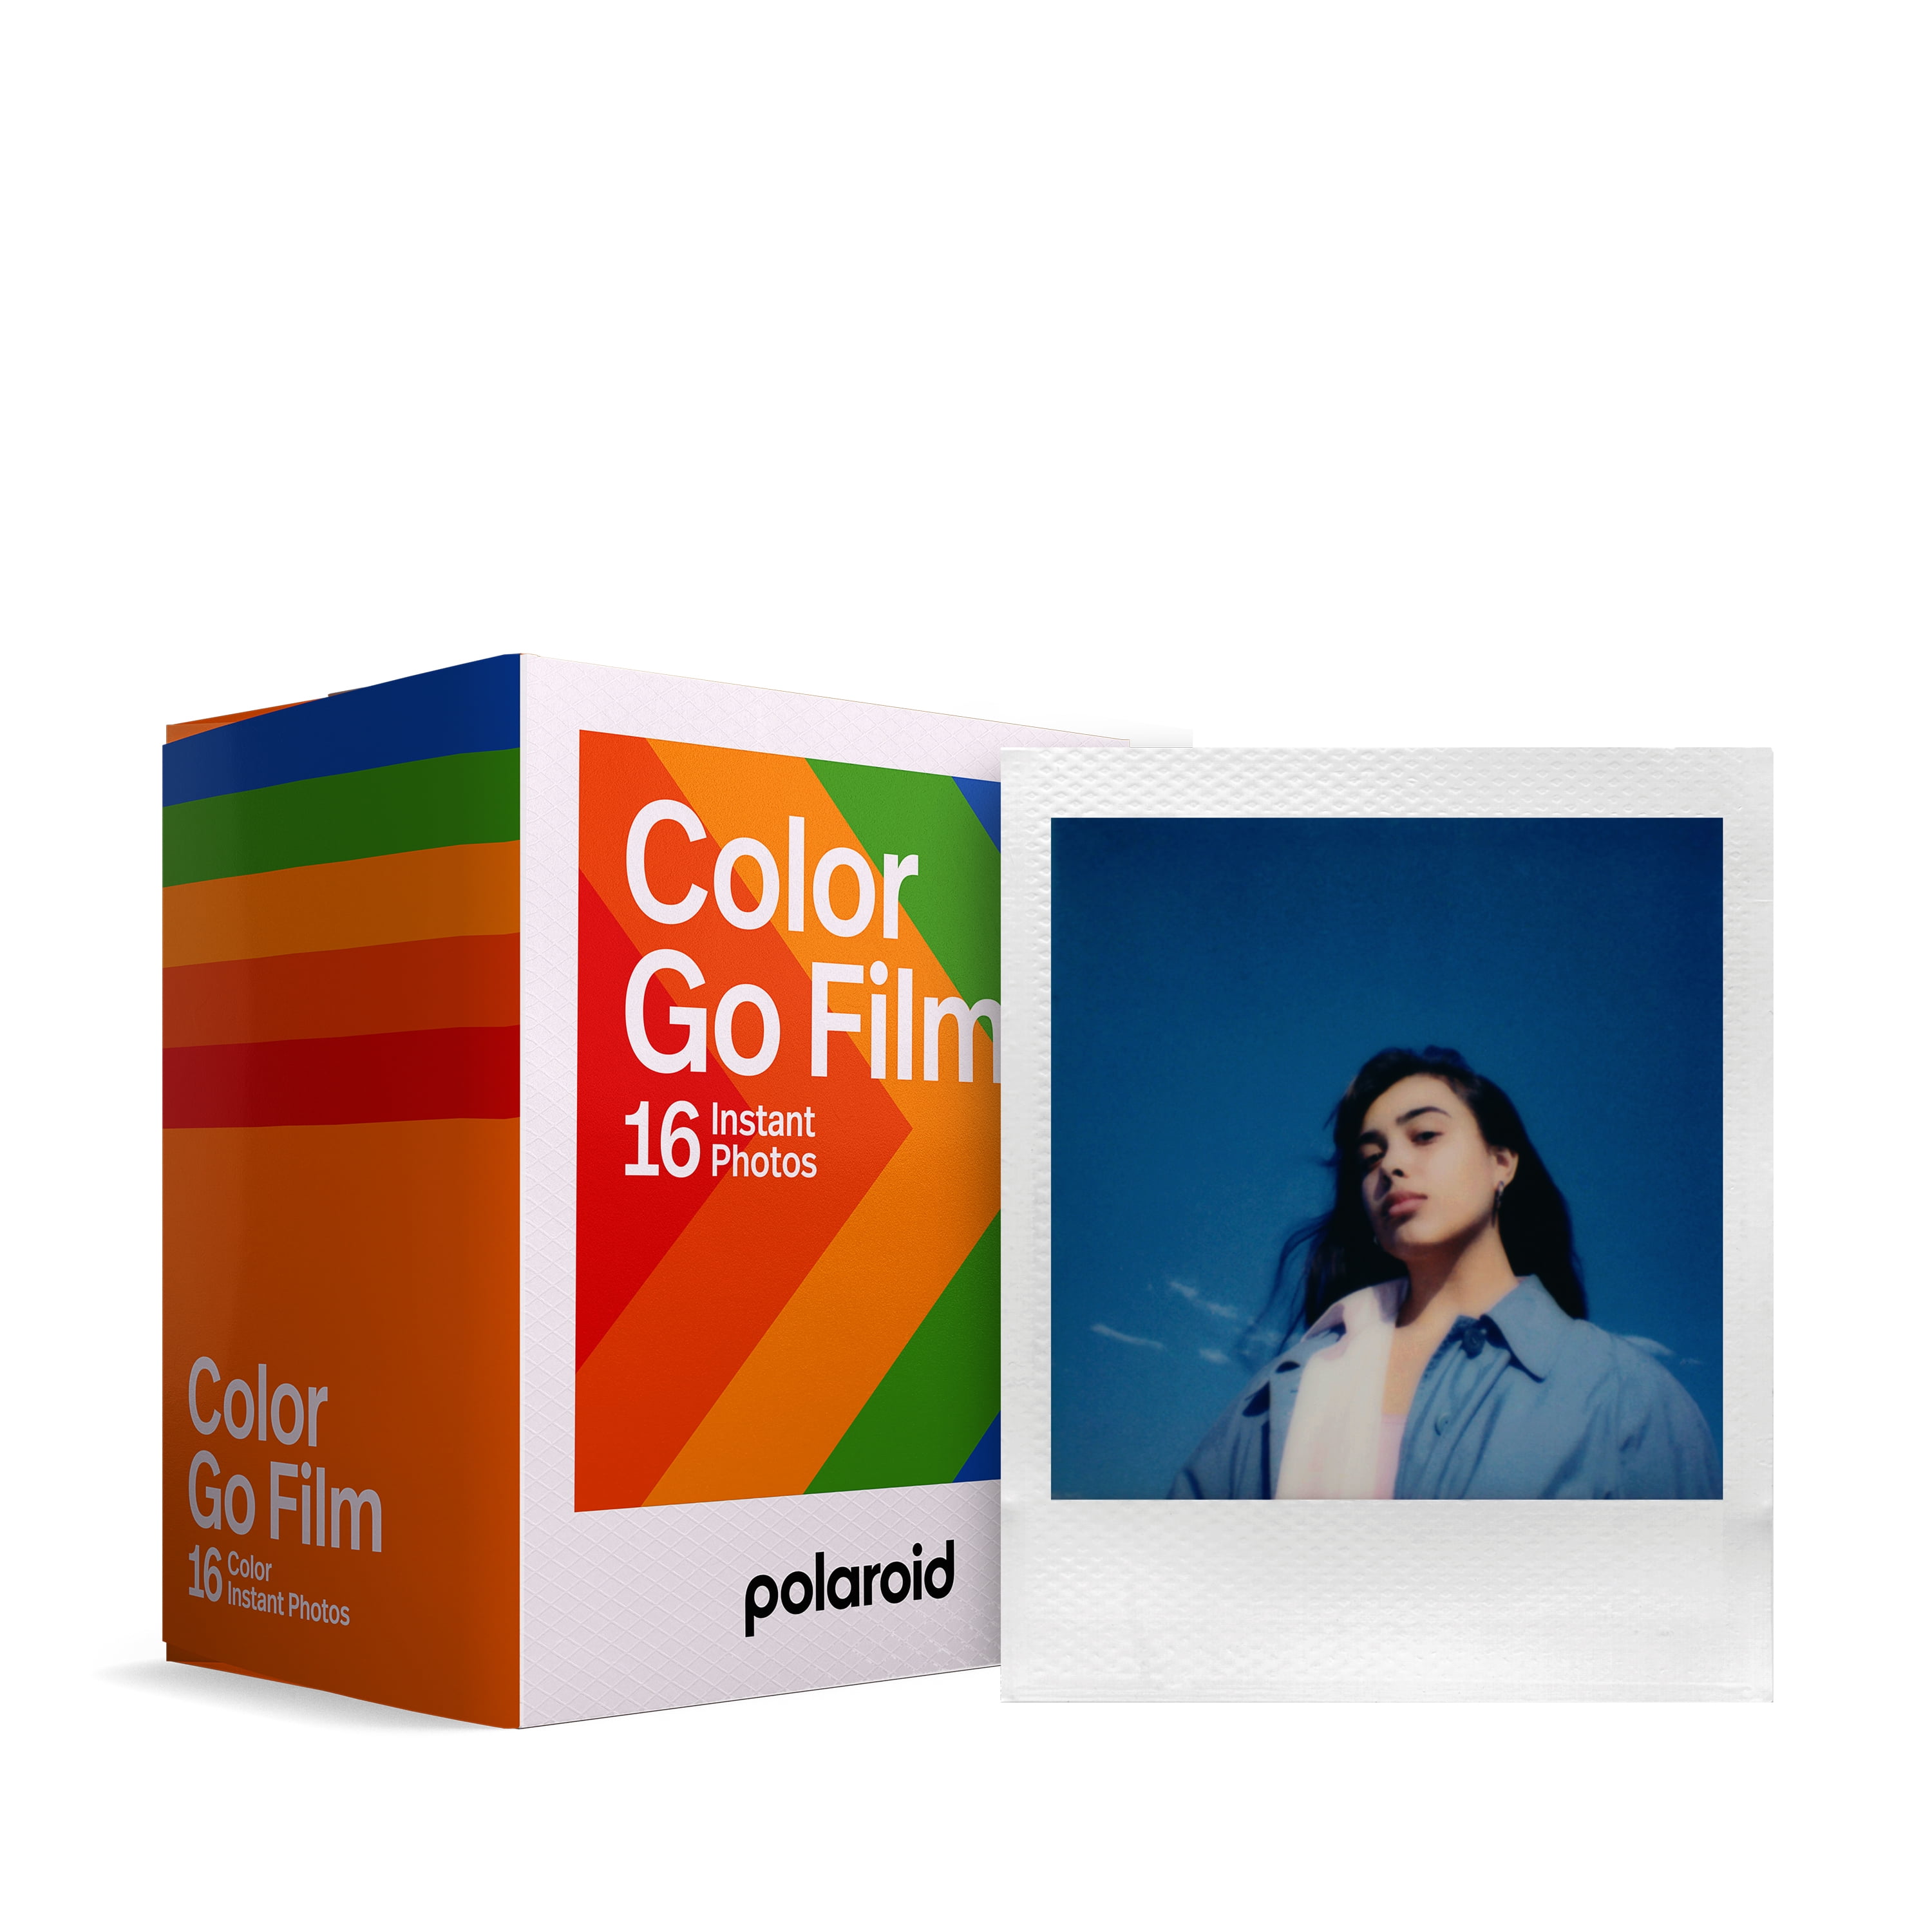 Papel fotográfico para Cámara instantánea Fujifilm Instax Mini Glossy